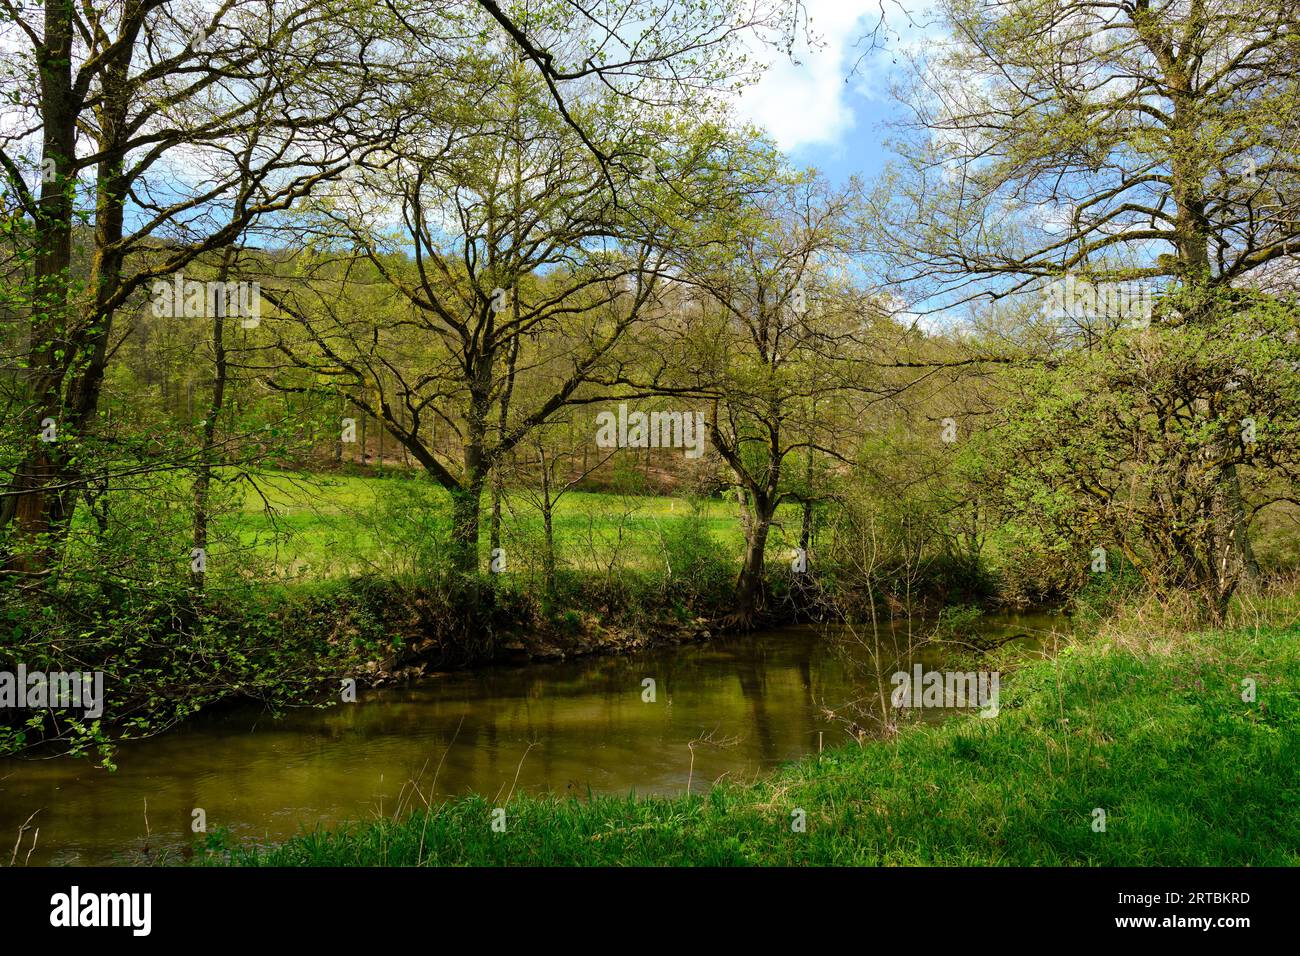 Landscape in the Sinn valley between Burgsinn and Rieneck, Main-Spessart district, Lower Franconia, Franconia, Bavaria, Germany Stock Photo